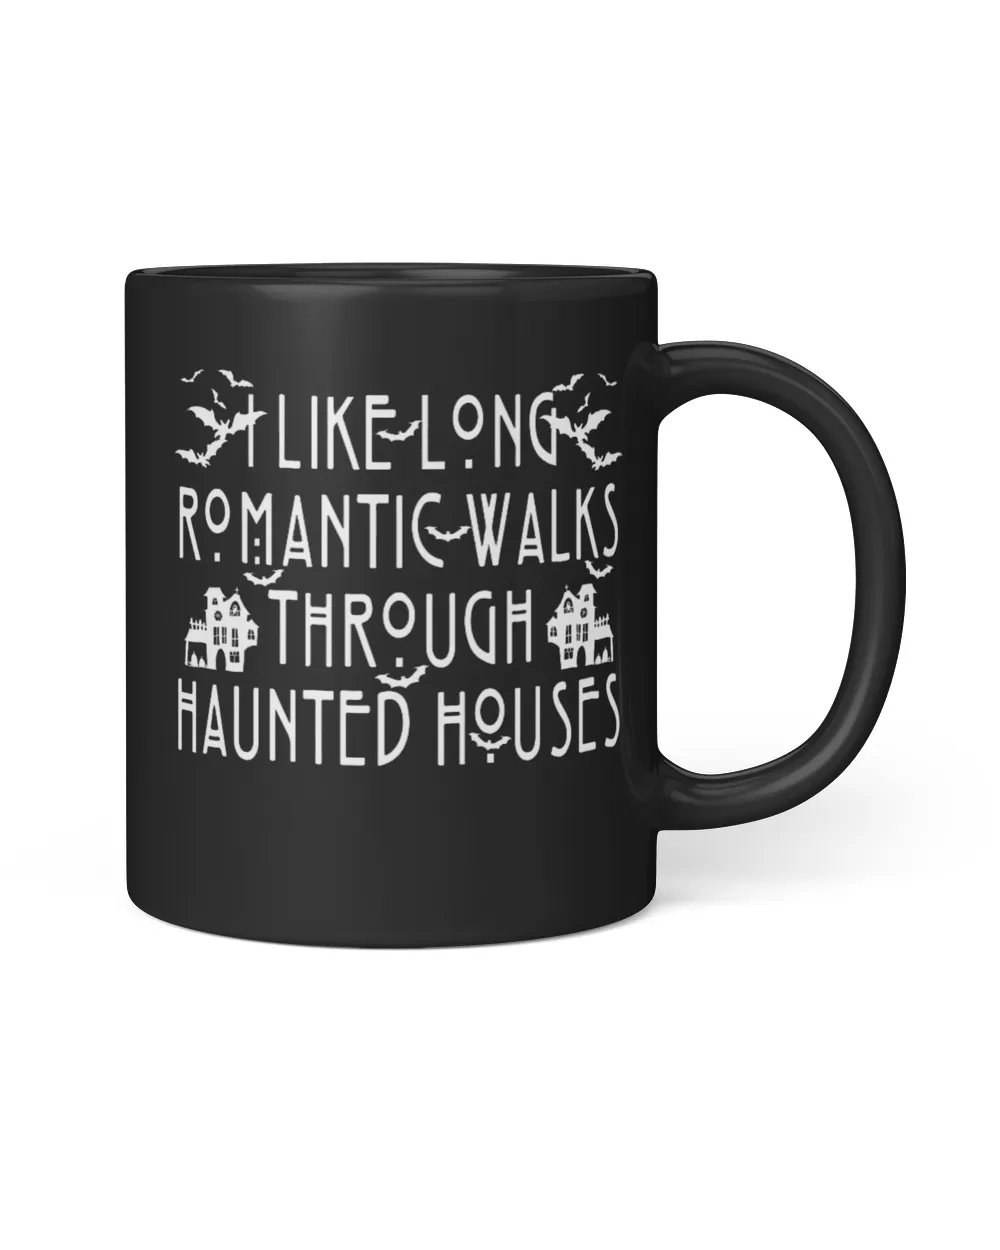 I Like Long Romantic Walks Through Haunted Houses